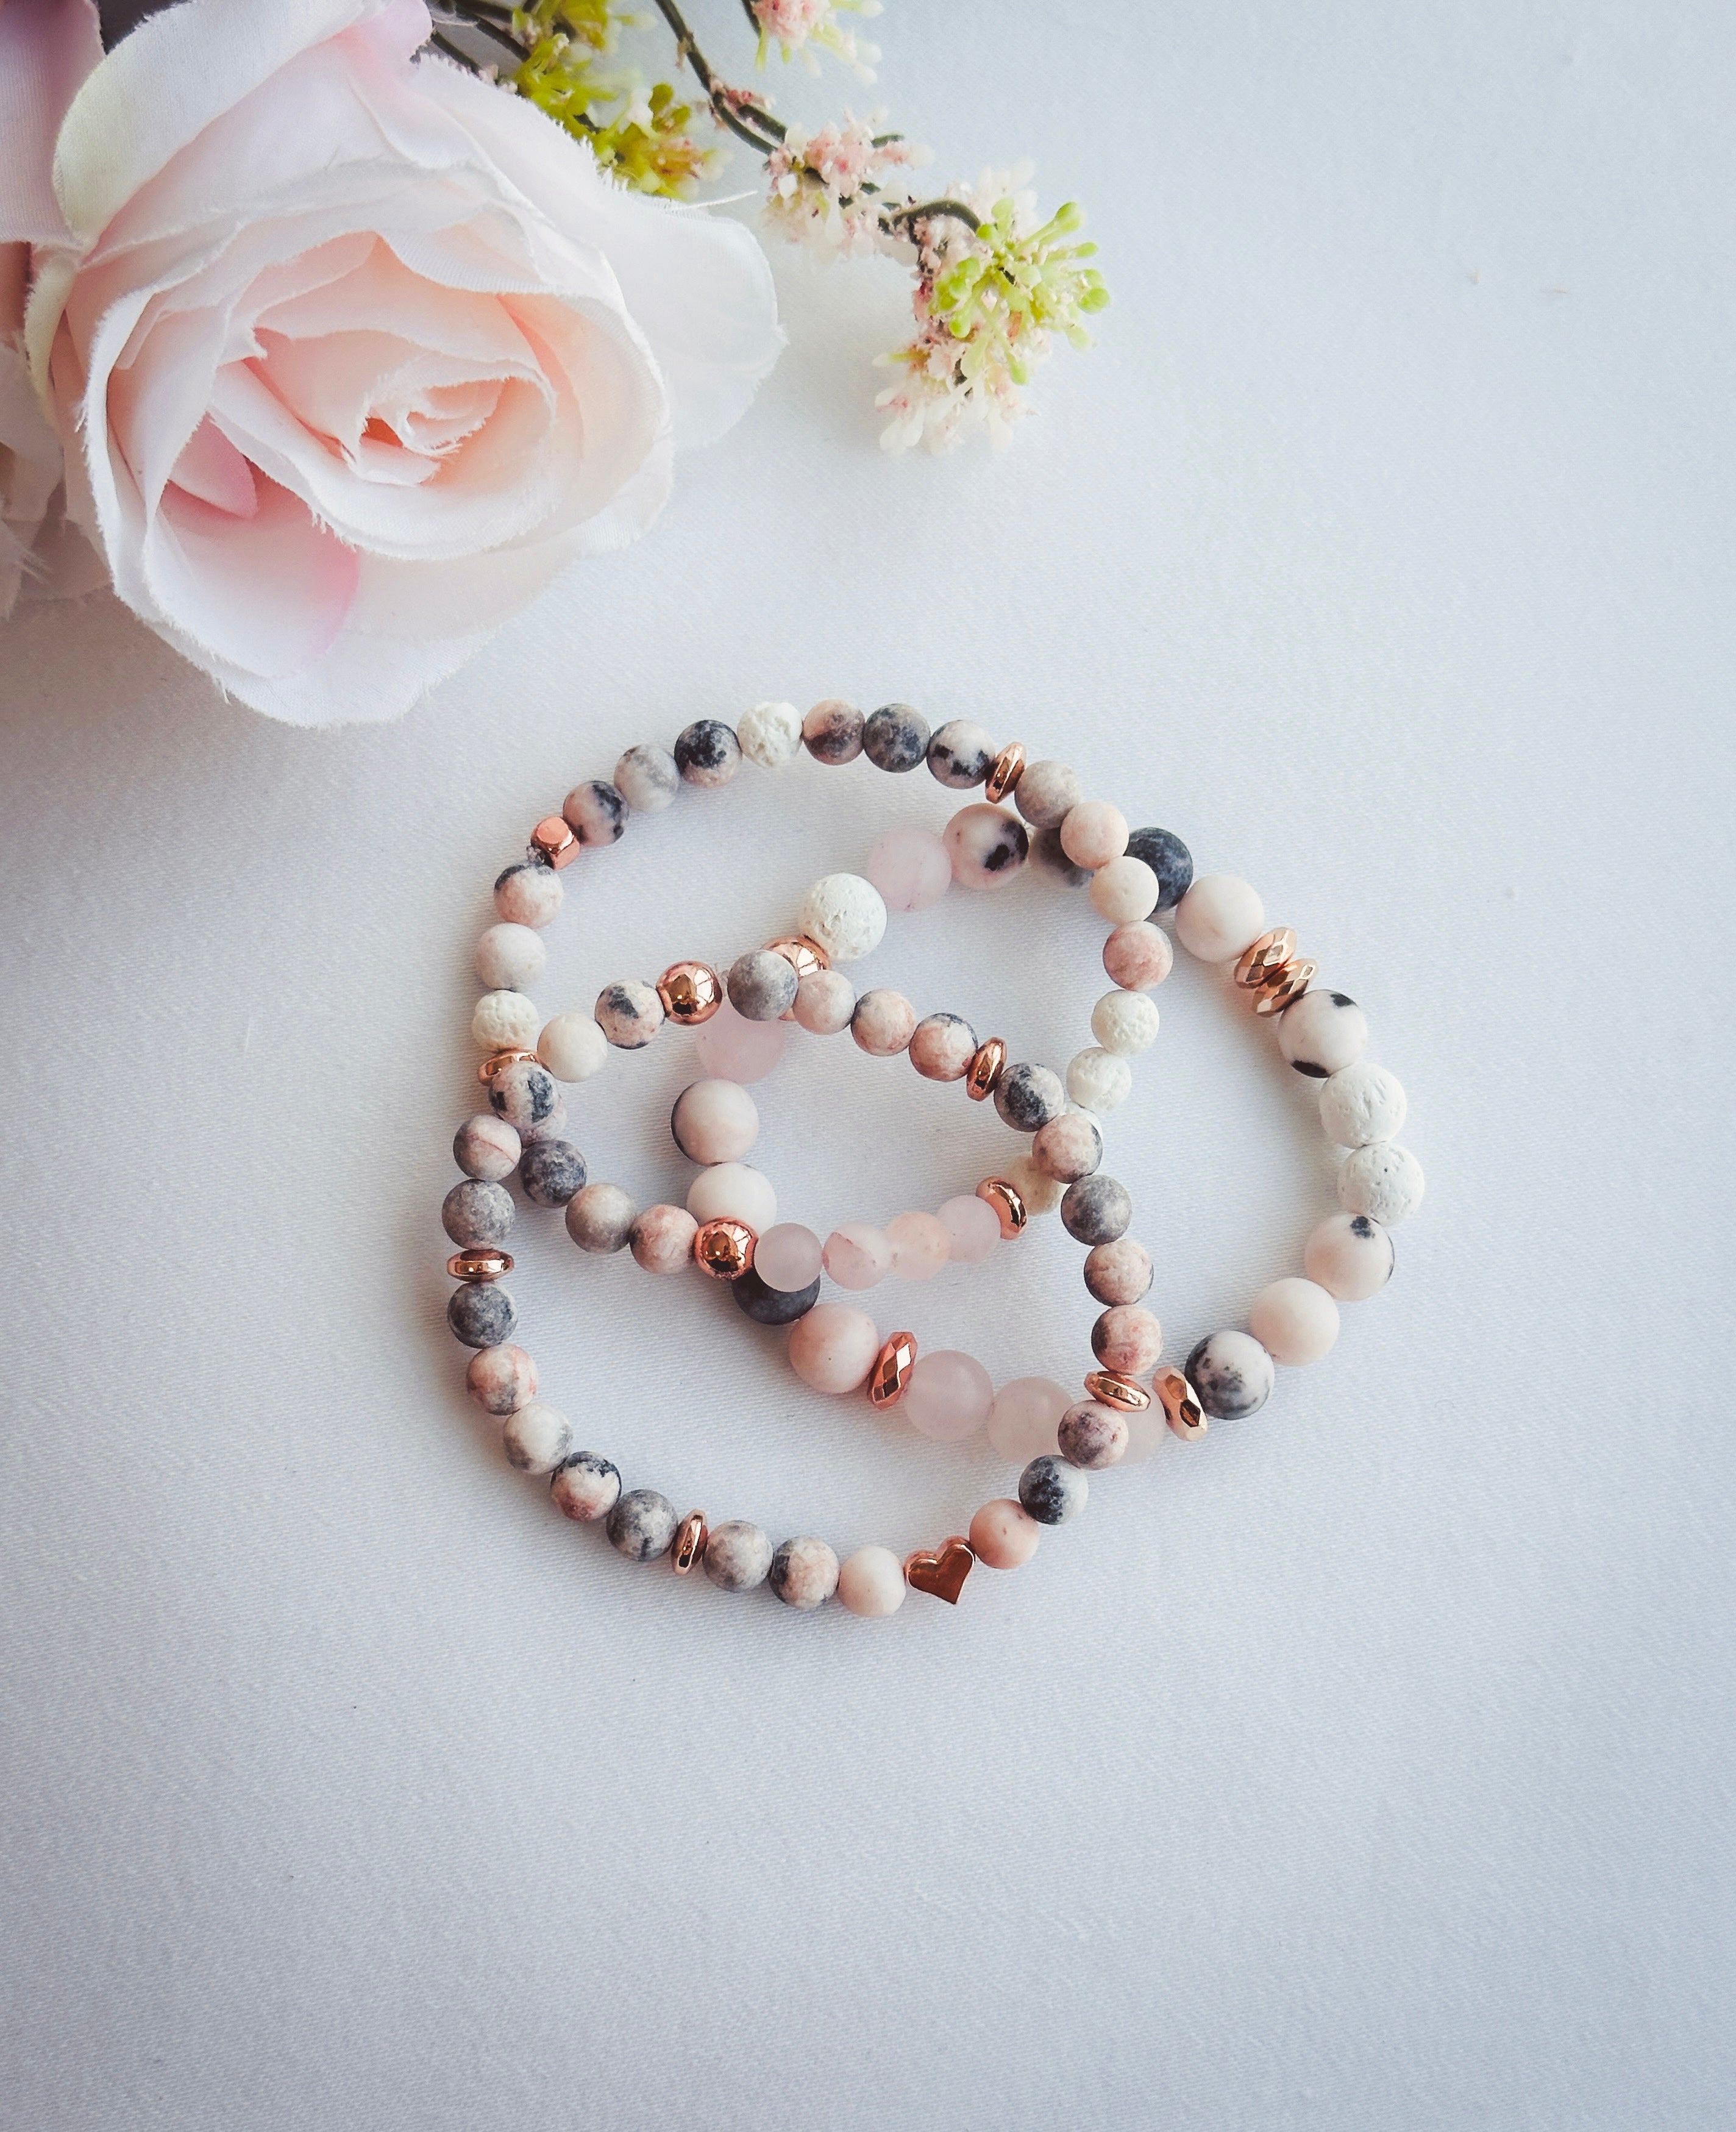 Zara Rose Bracelet set created with Pink Zebra Jasper, Frosted rose quartz and a heart bead